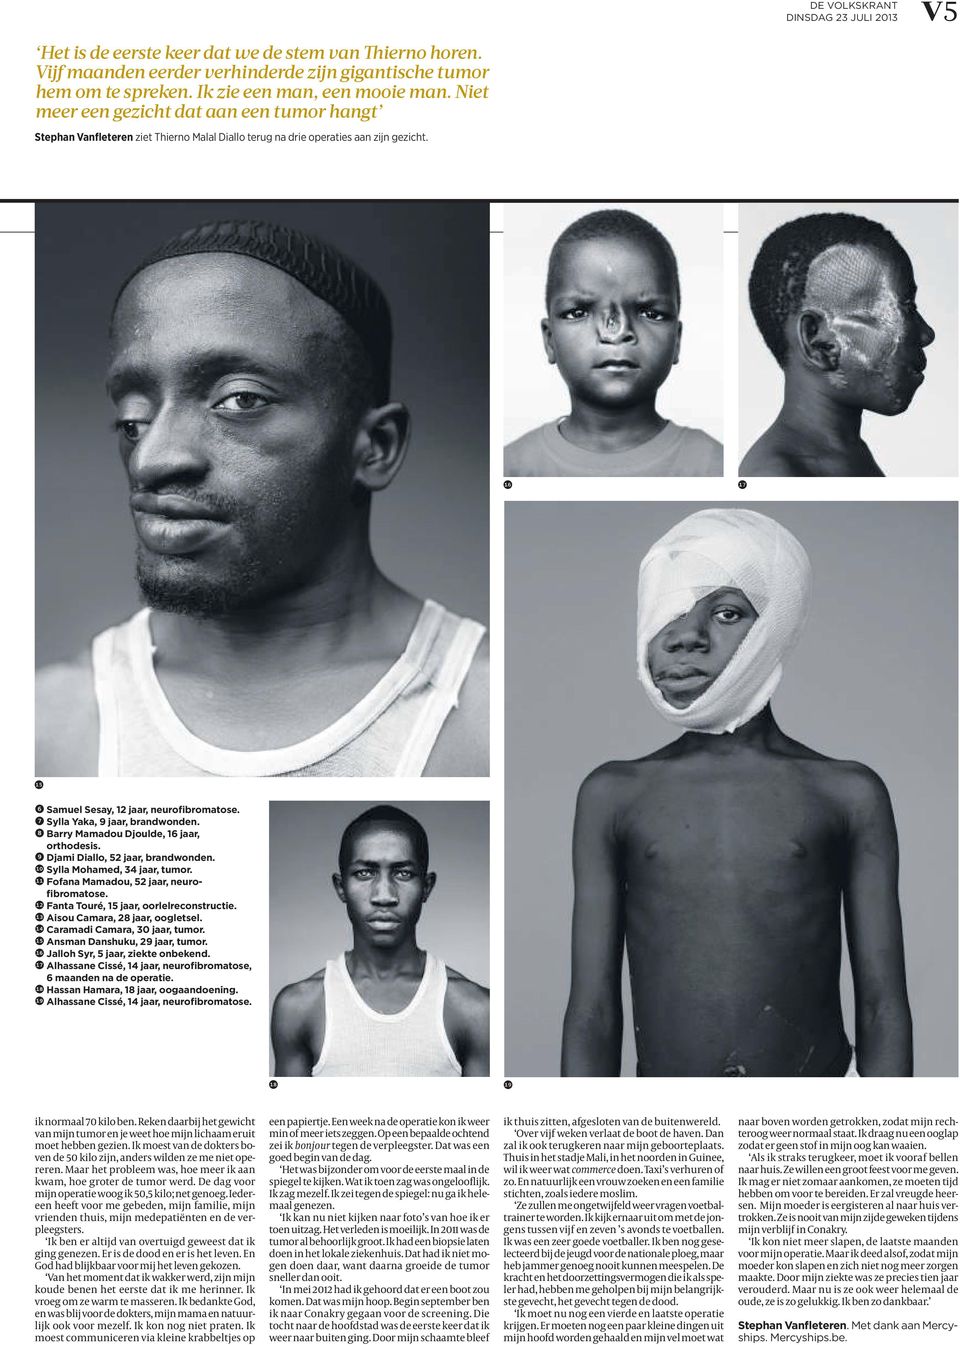 7 Sylla Yaka, 9 jaar, brandwonden. 8 Barry Mamadou Djoulde, 16 jaar, orthodesis. 9 Djami Diallo, 52 jaar, brandwonden. 10 Sylla Mohamed, 34 jaar, tumor. 11 Fofana Mamadou, 52 jaar, neurofibromatose.